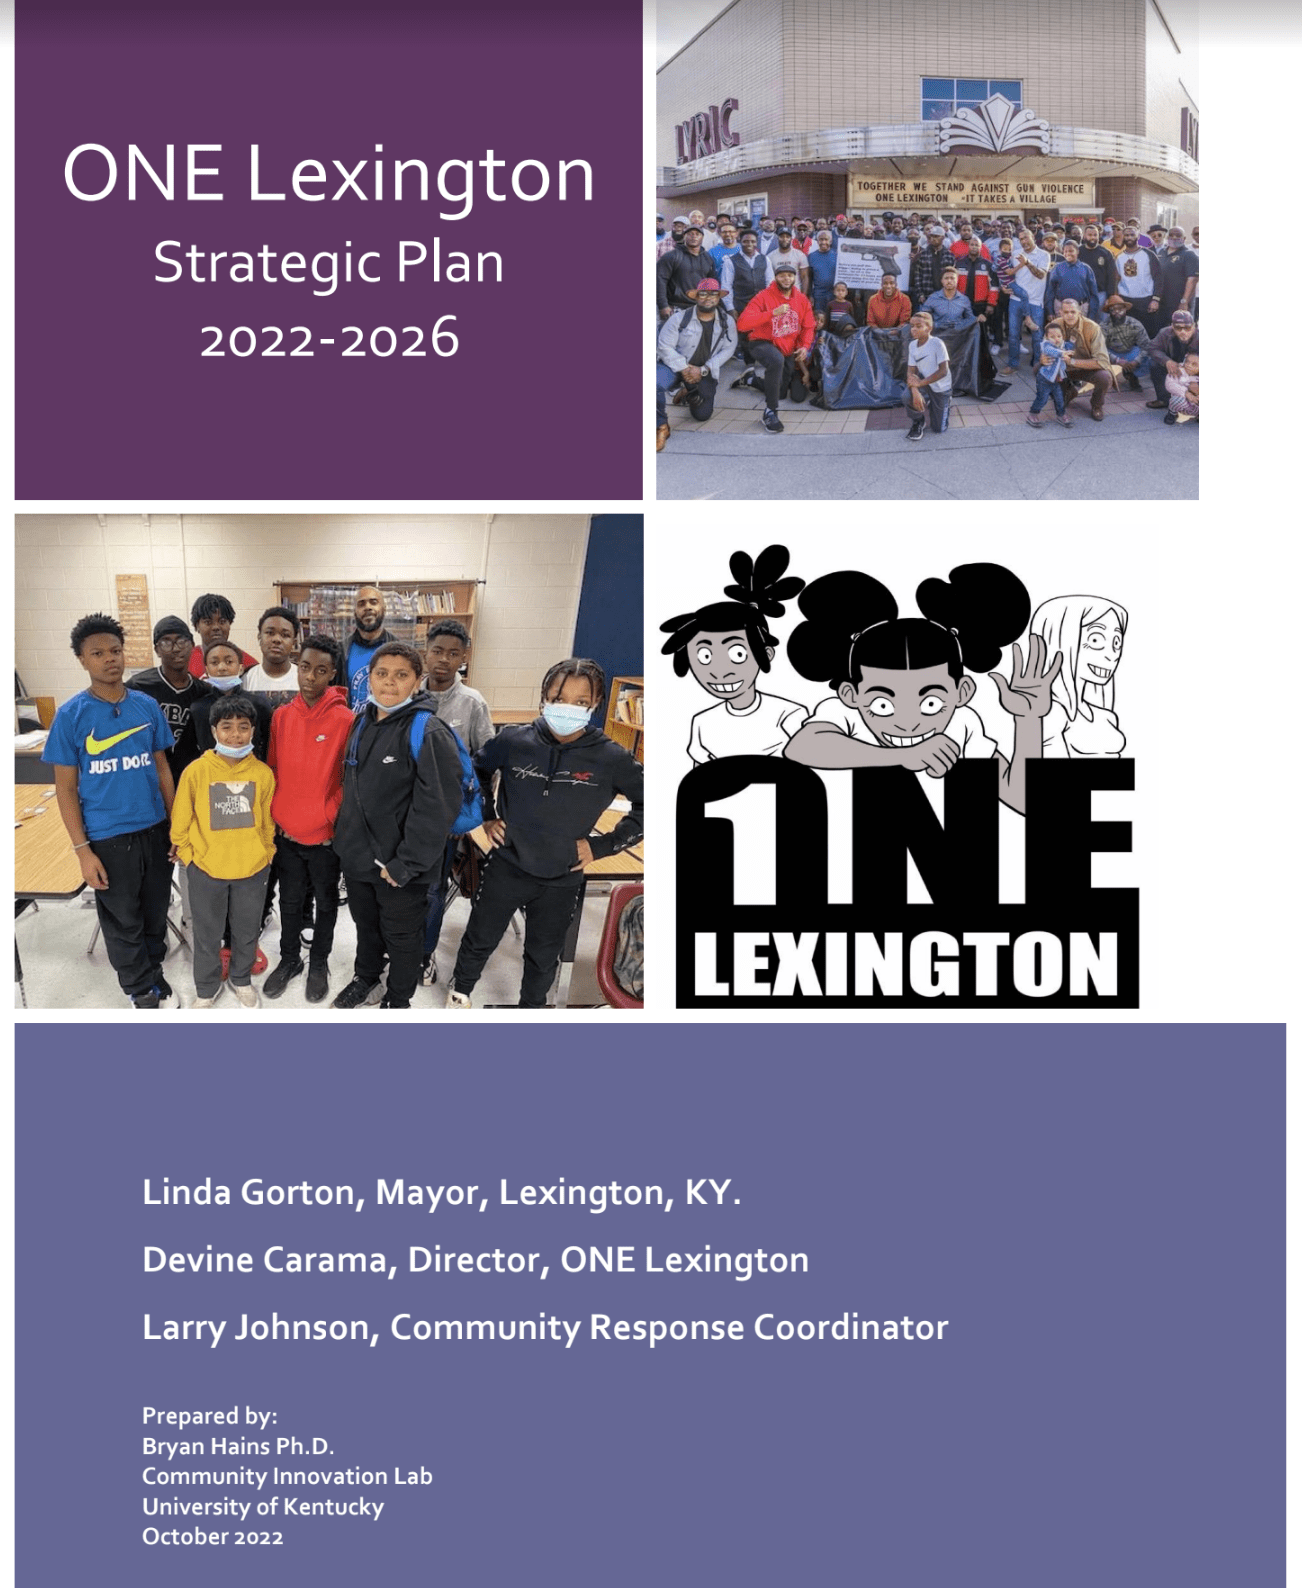 LFUCG releases ONE Lexington Strategic Plan